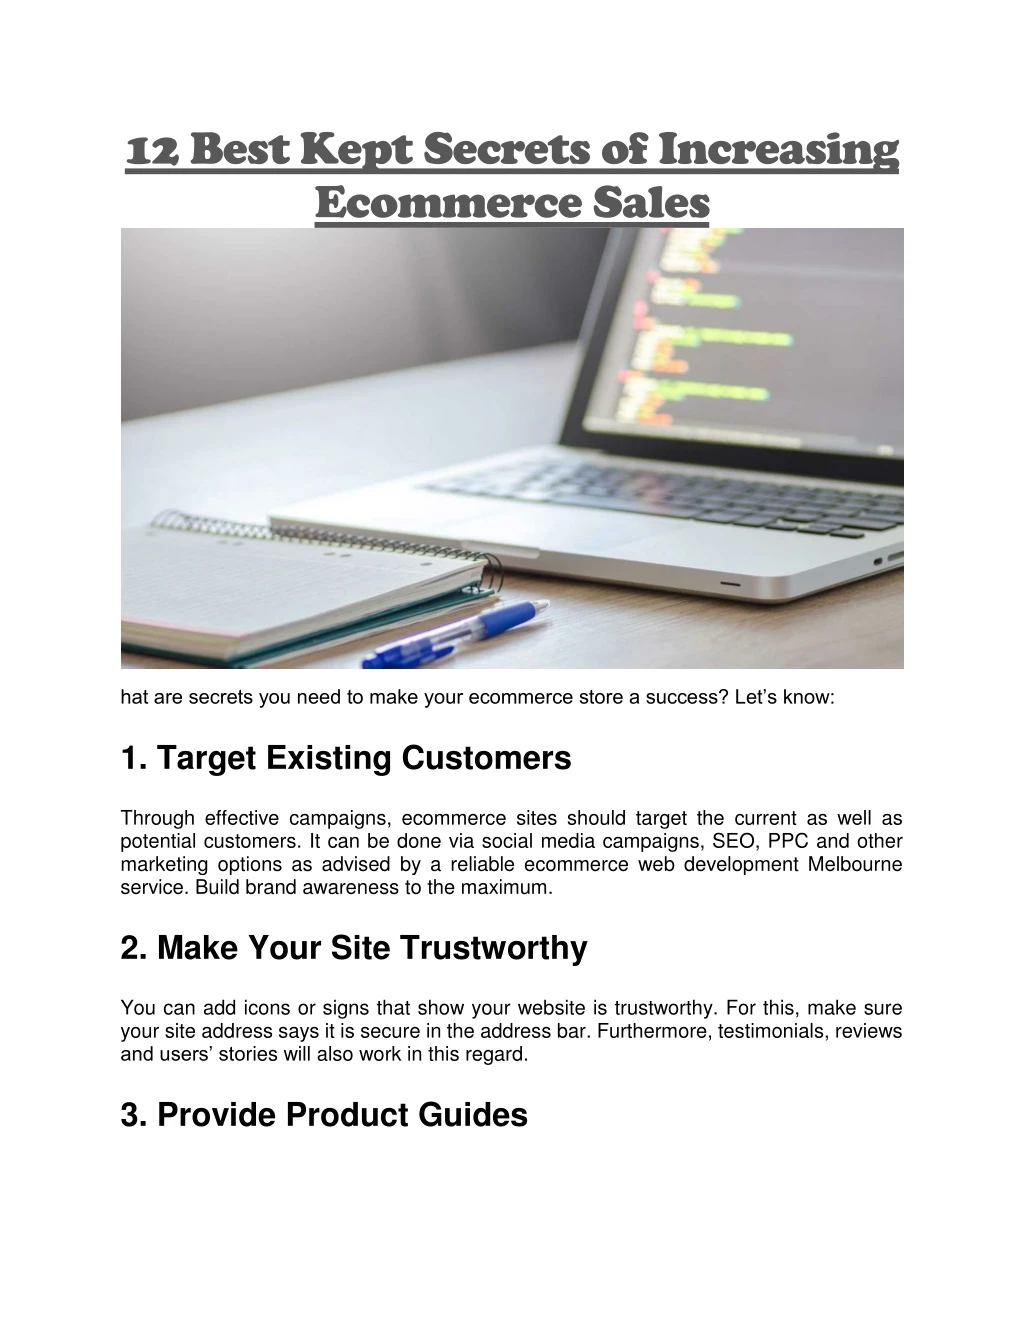 12 best kept secrets of increasing ecommerce sales